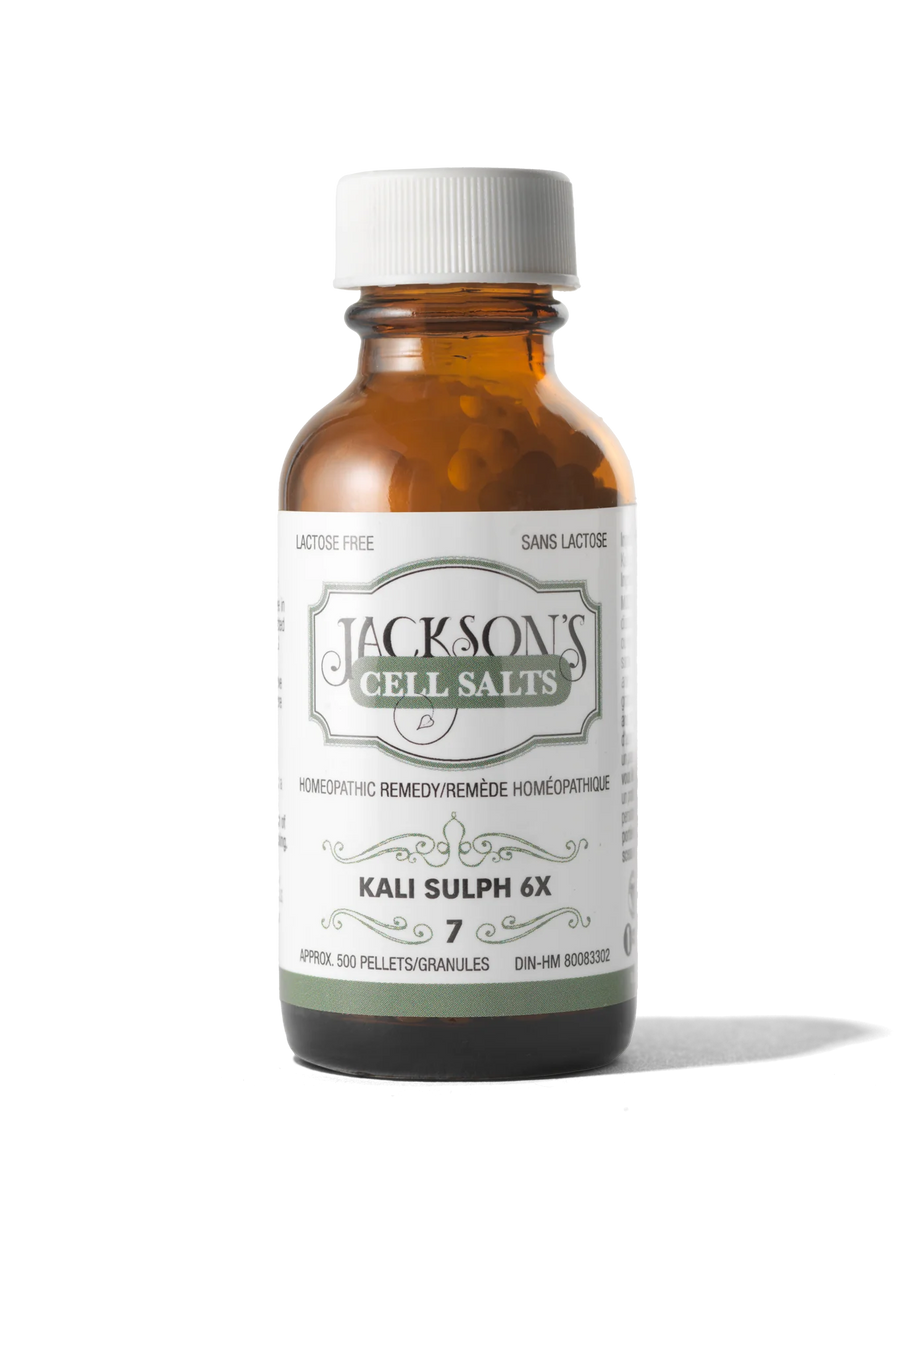 Jackson’s #7 Kali Sulph 6x (Potassium Sulfate) Schuessler Mineral Cell Salt